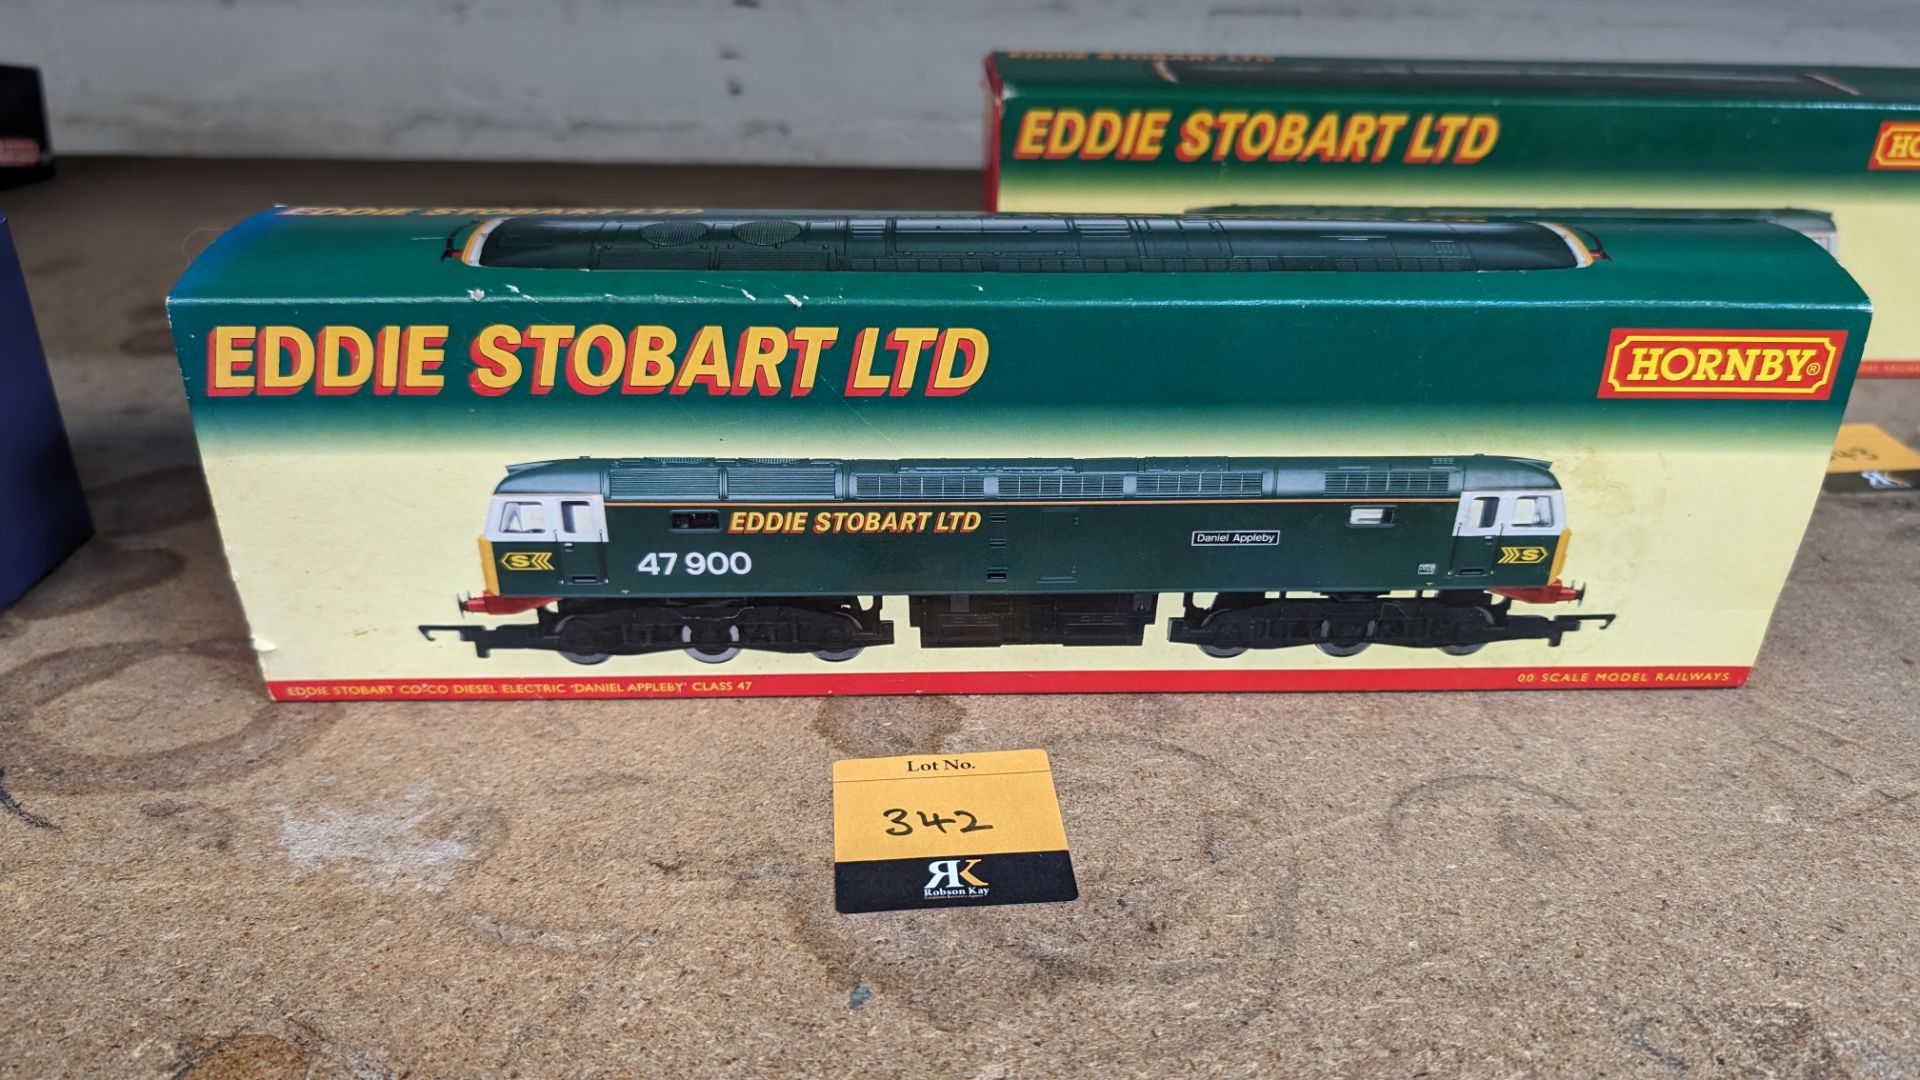 Hornby 00 scale model train 47 900, Eddie Stobart co-co diesel electric "Daniel Appleby" Class 47